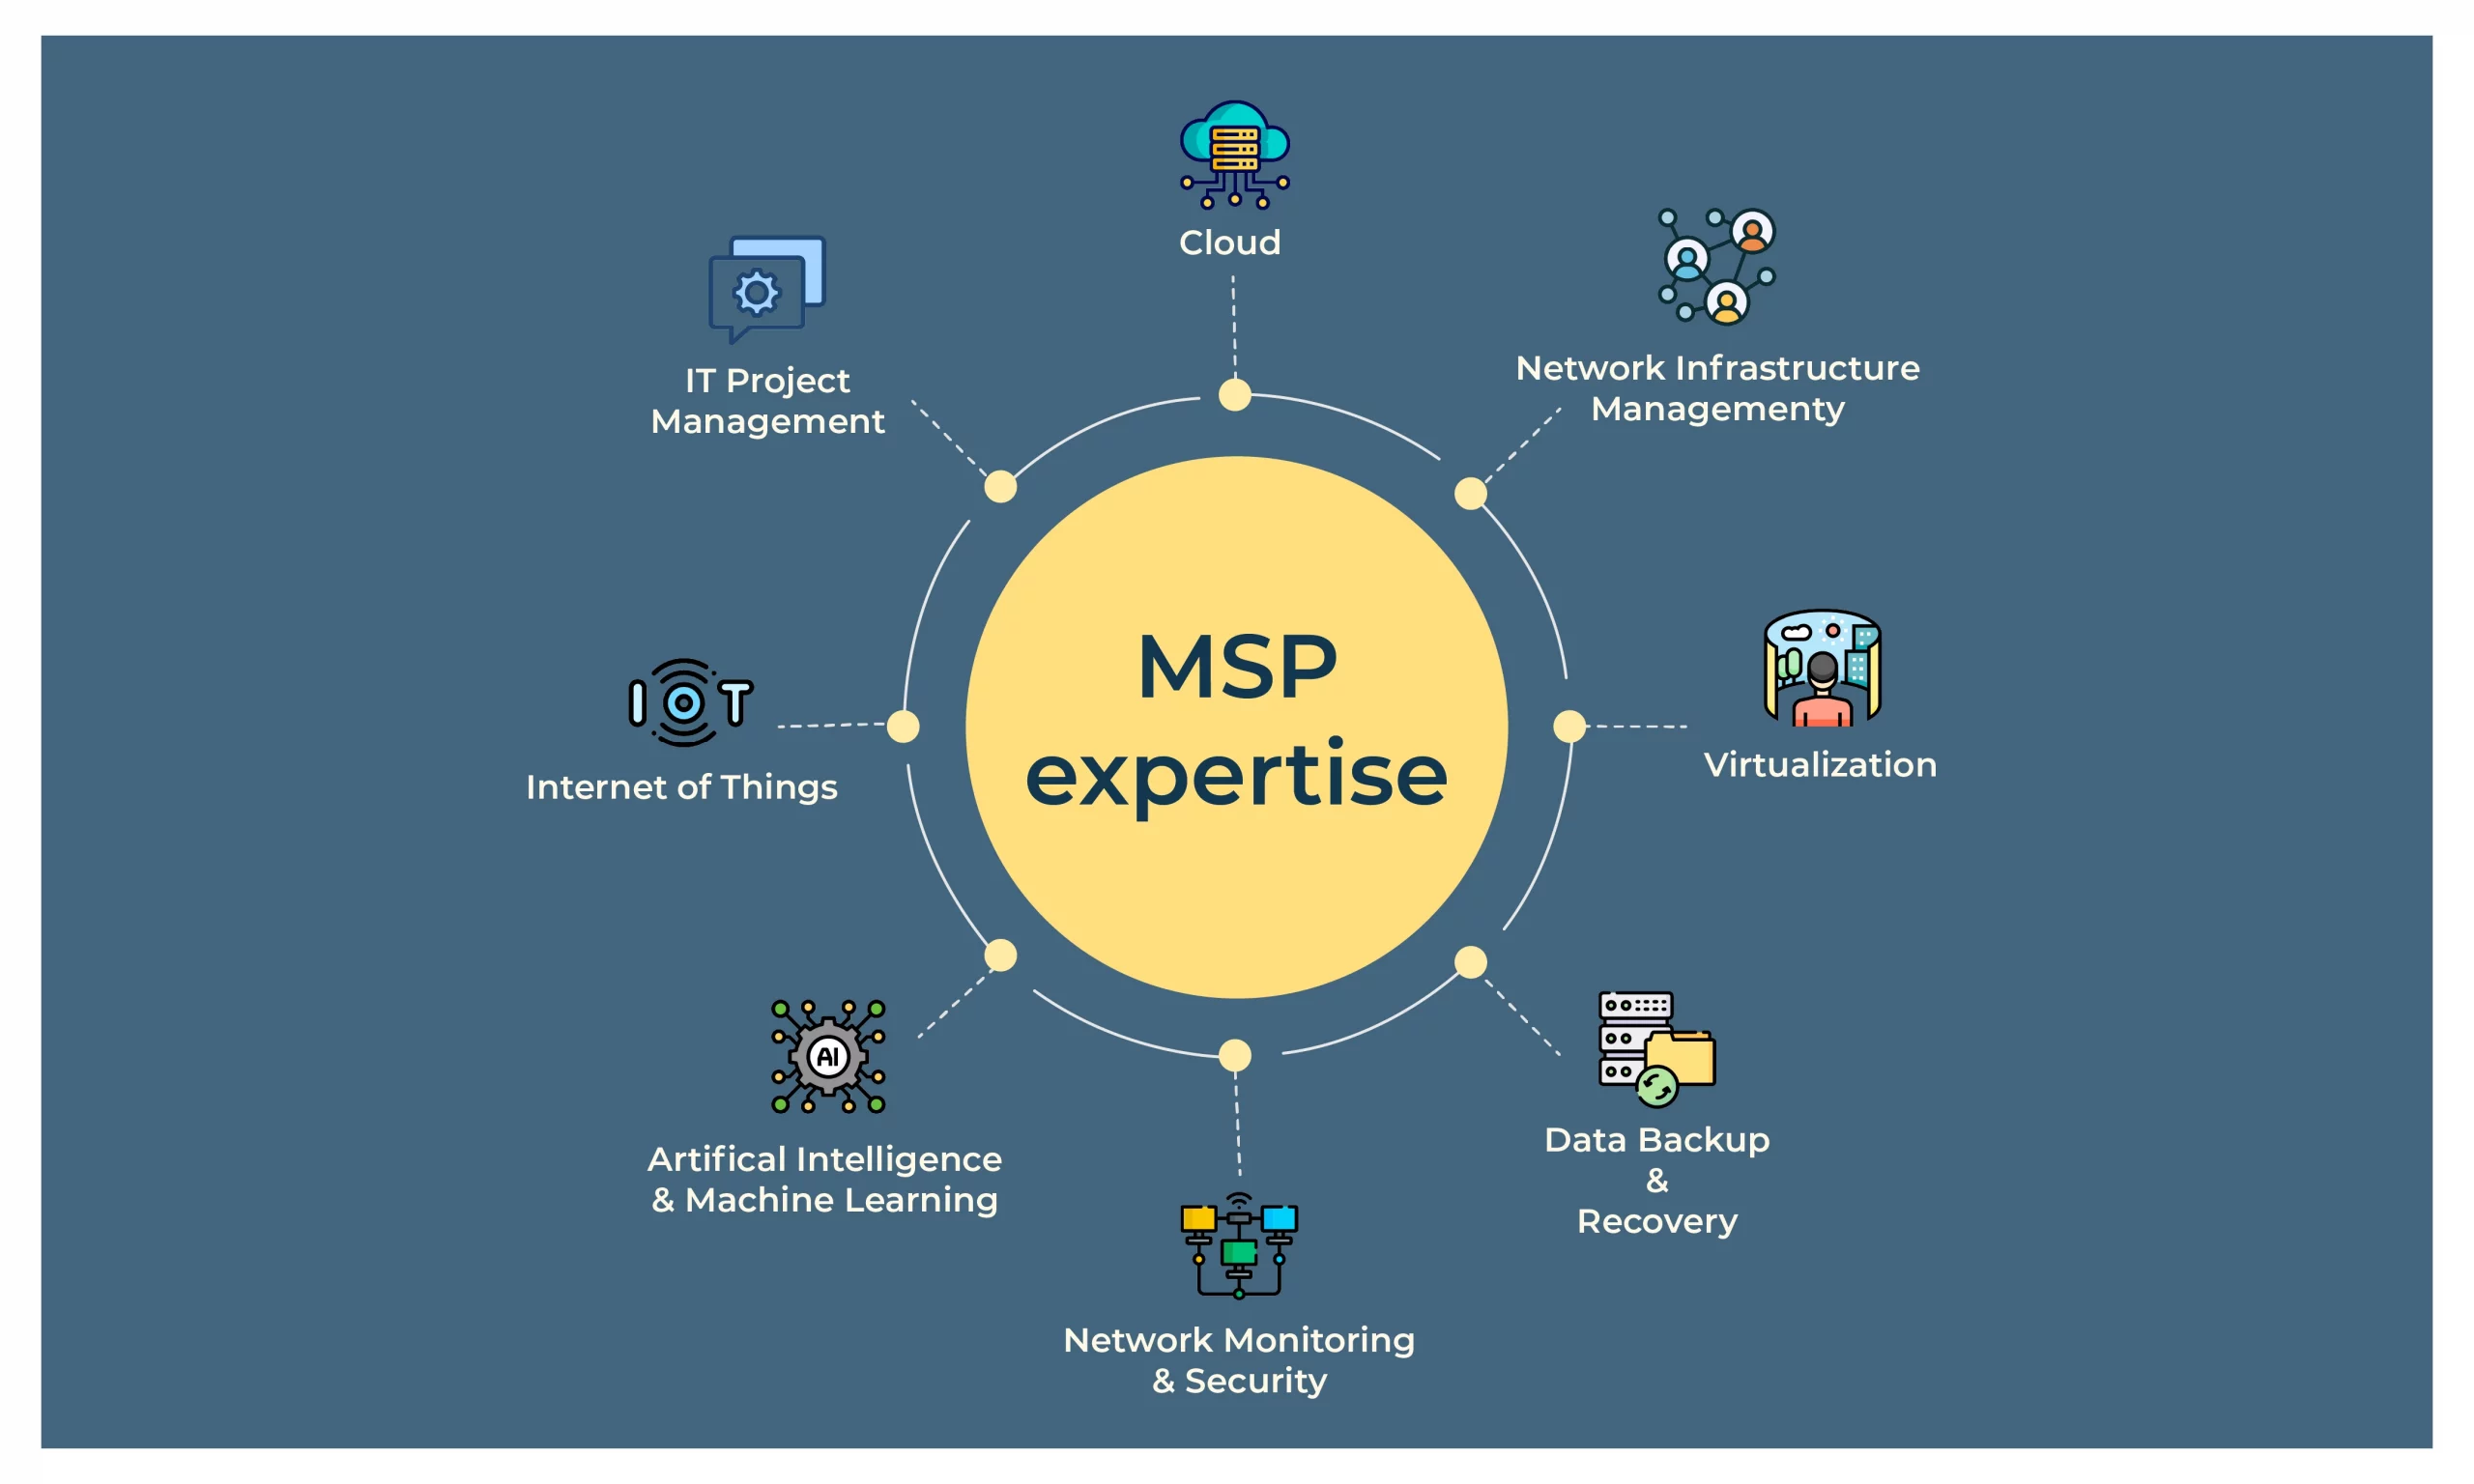 MSP expertise